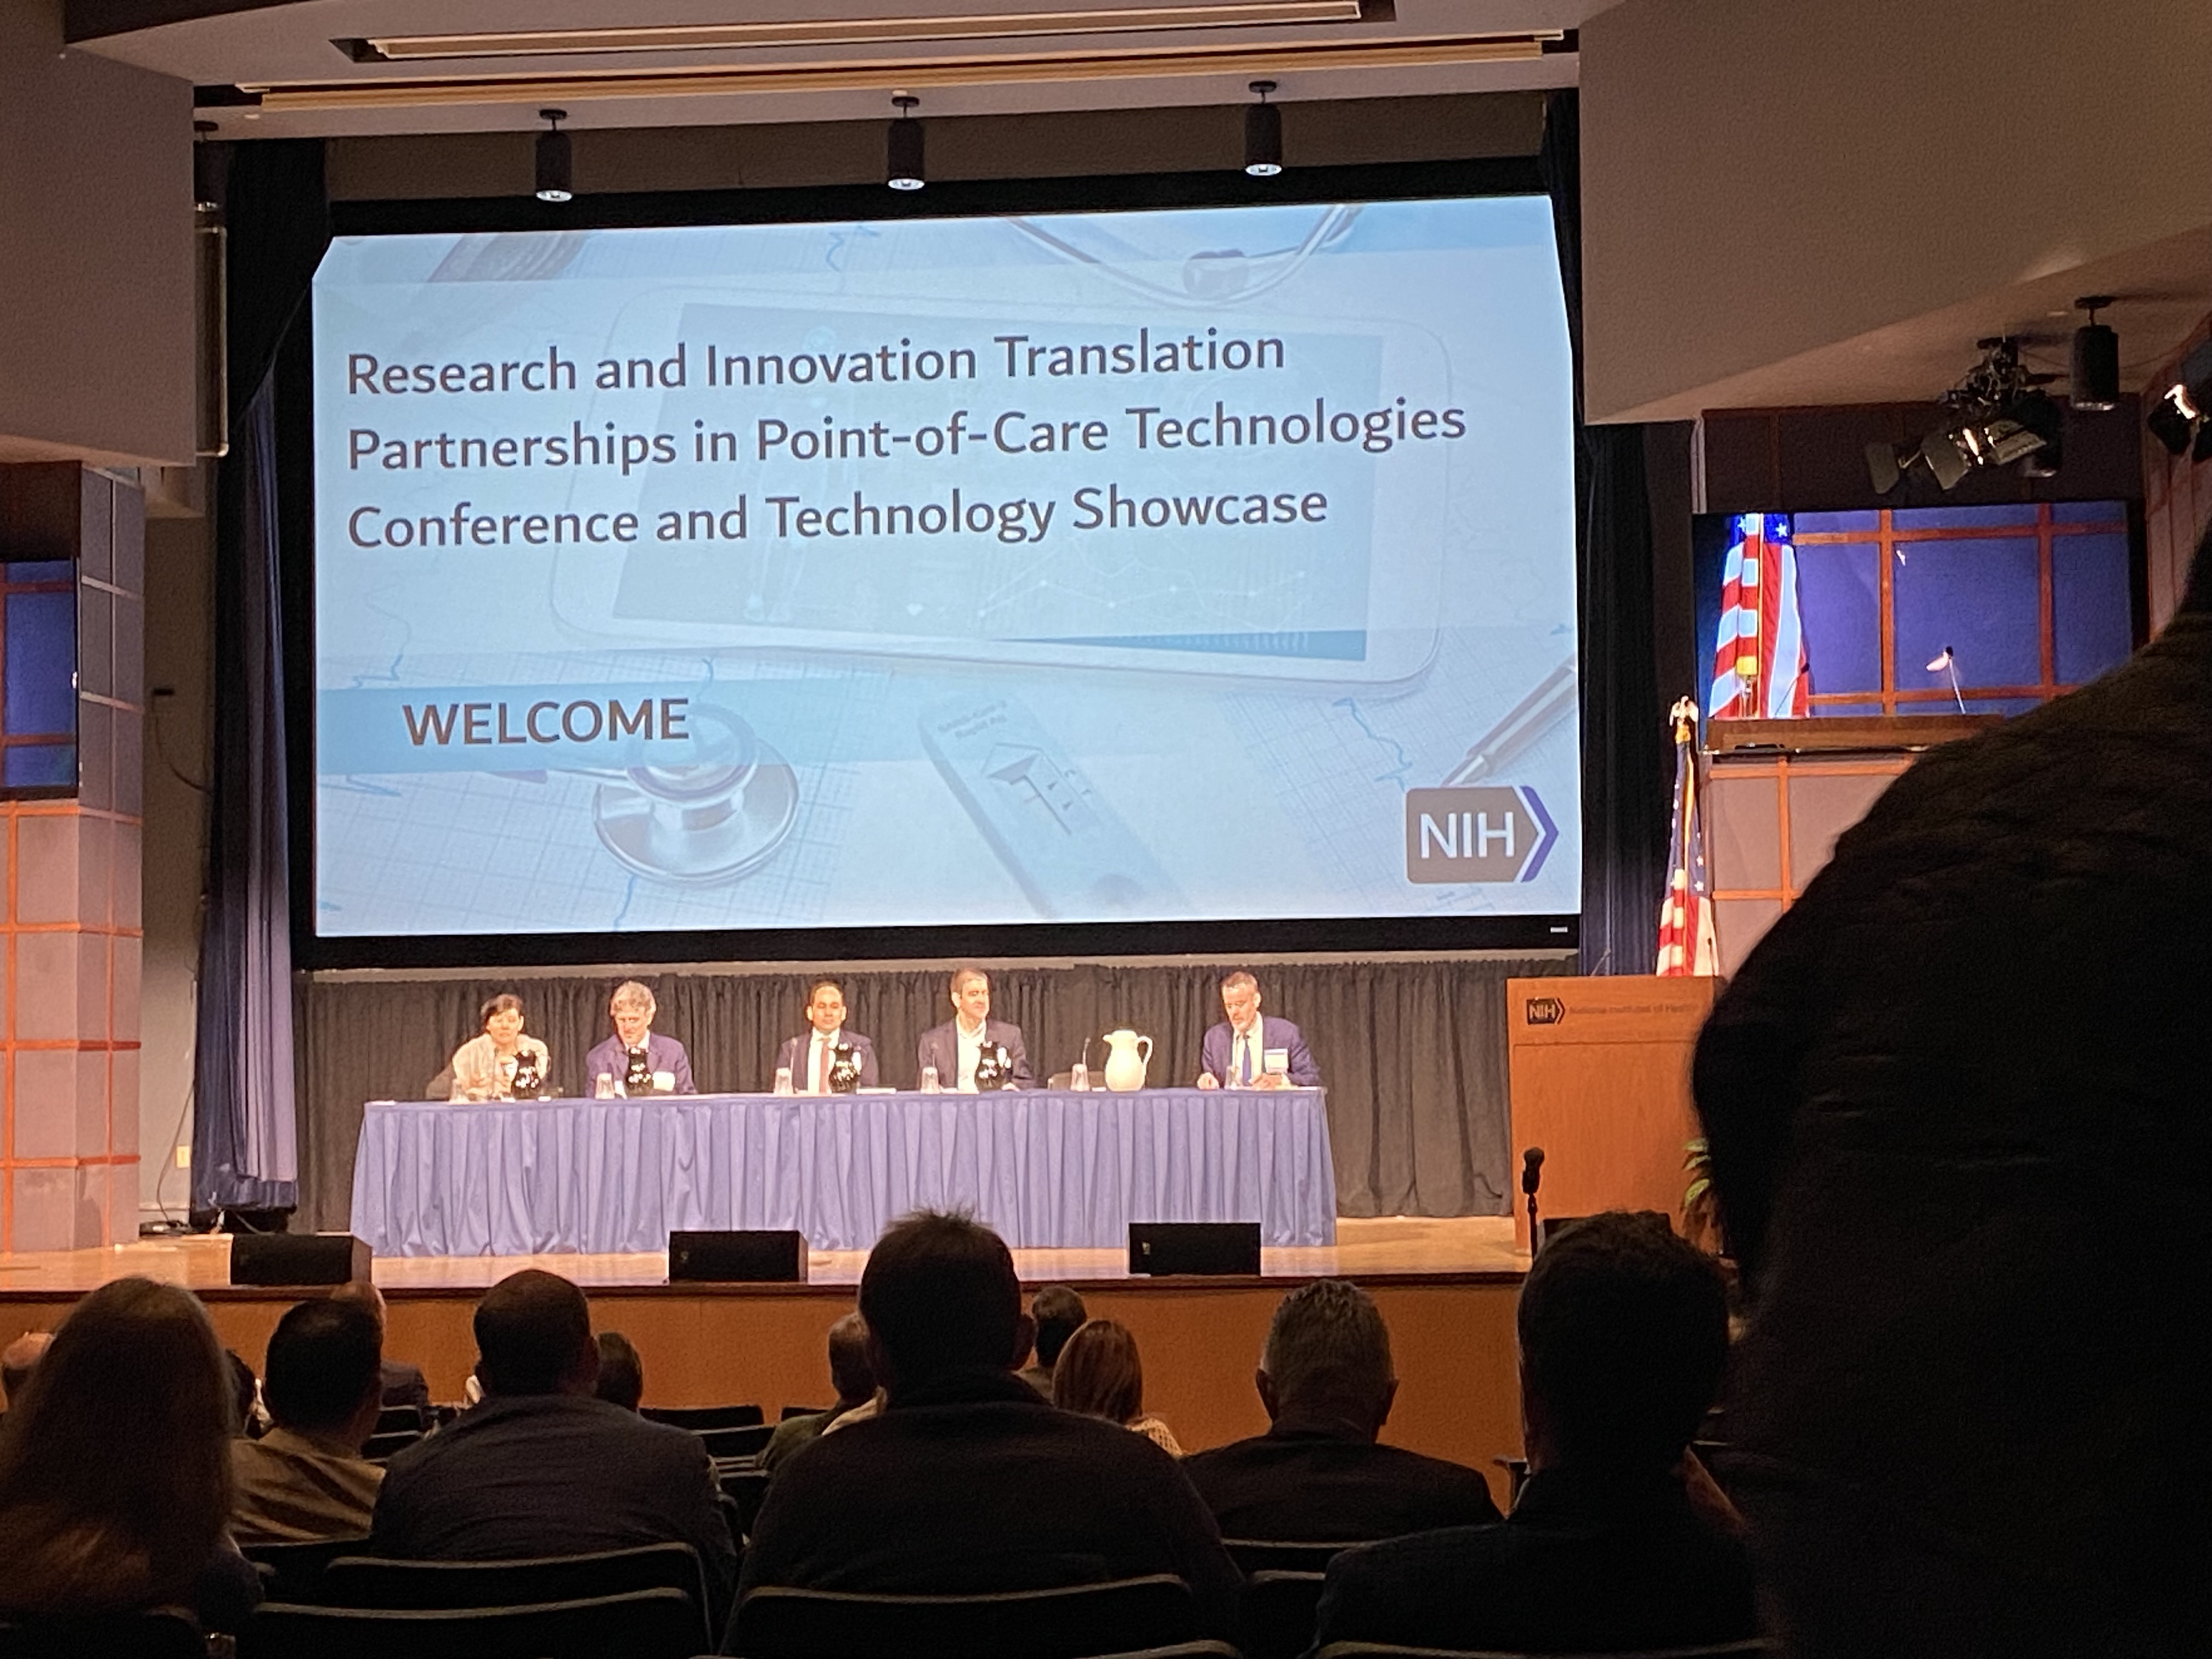 CAPCaT conference panel at NIH